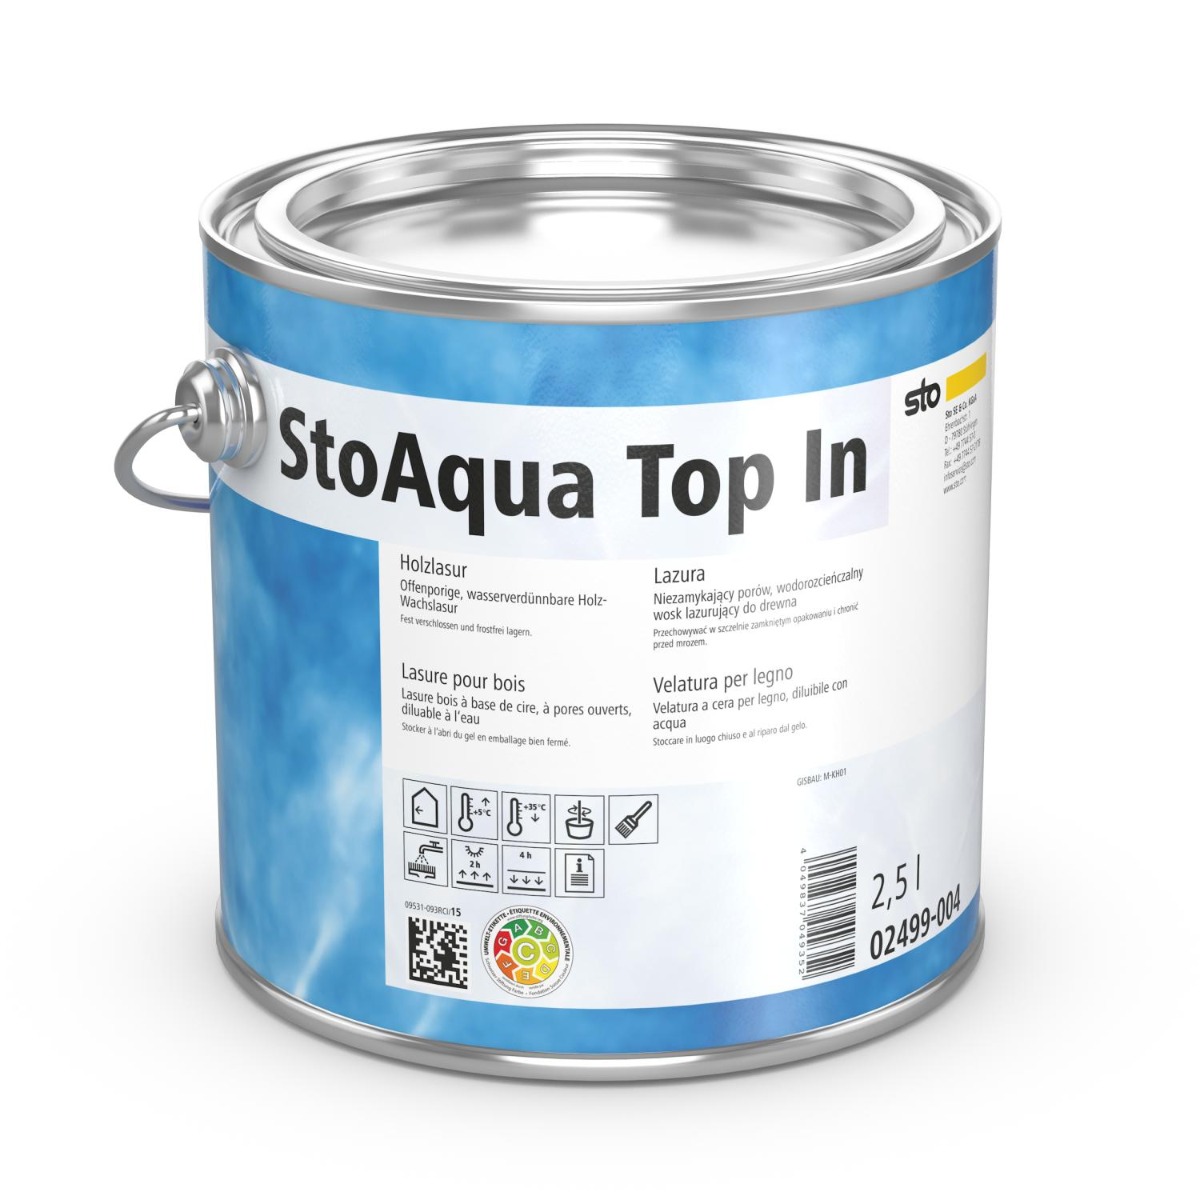 StoAqua Top In-Farbtonklasse II 2,5 Liter-2,5 Liter Dose